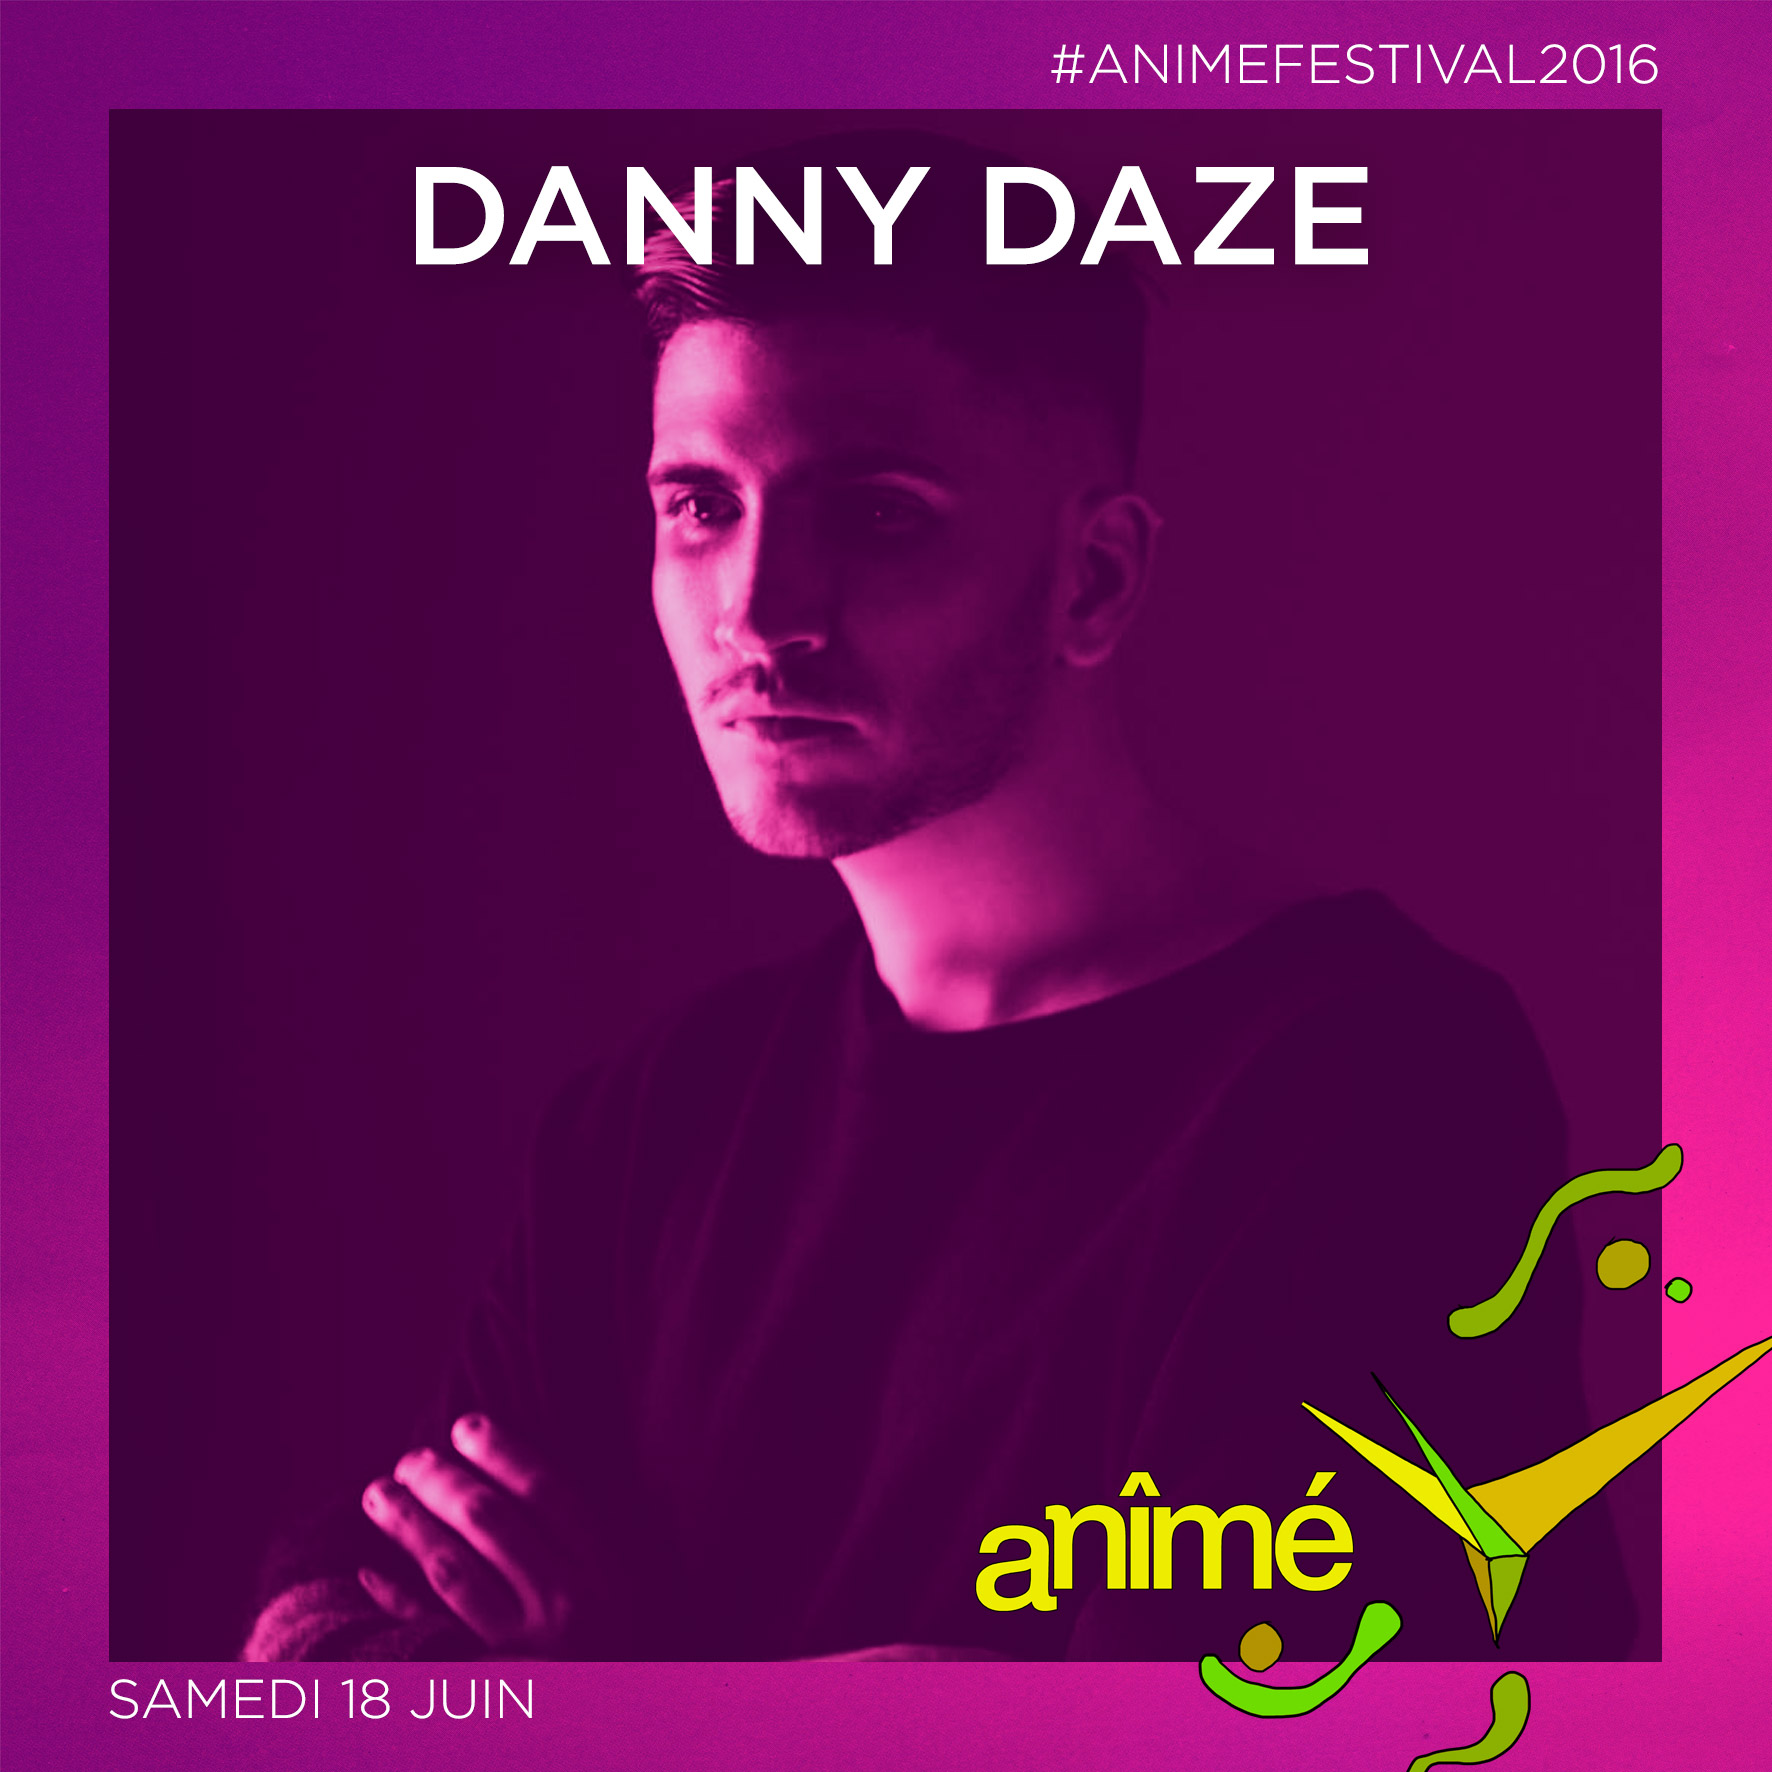 Danny Daze